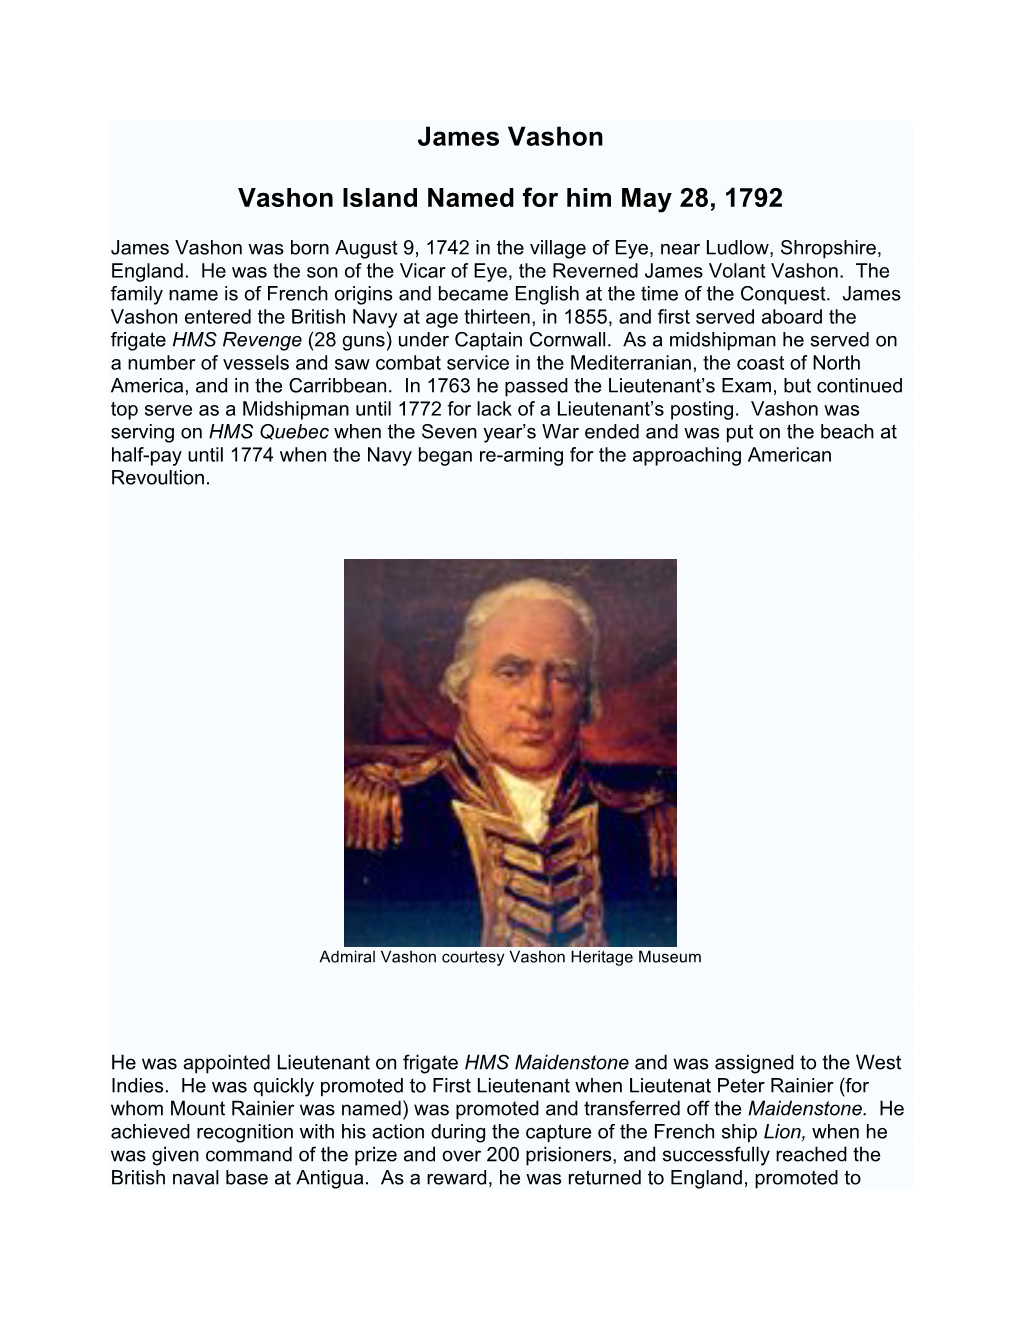 James Vashon Vashon Island Named for Him May 28, 1792